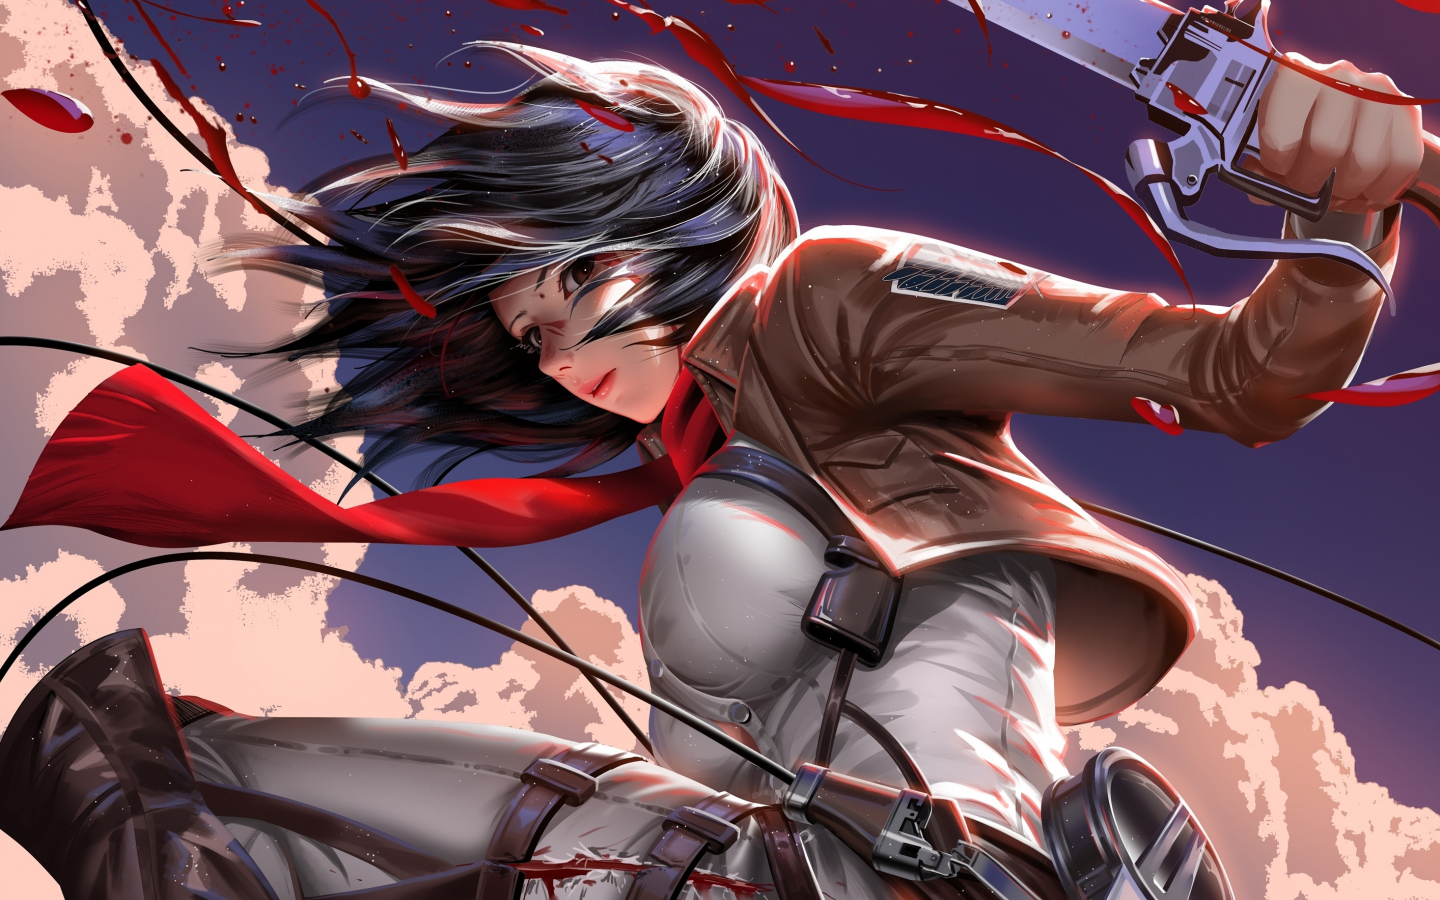 Download 1440x900 Wallpaper Anime, Attack On Titan, Mikasa Ackerman,  Widescreen 16:10, Widescreen, 1440x900 Hd Image, Background, 34382